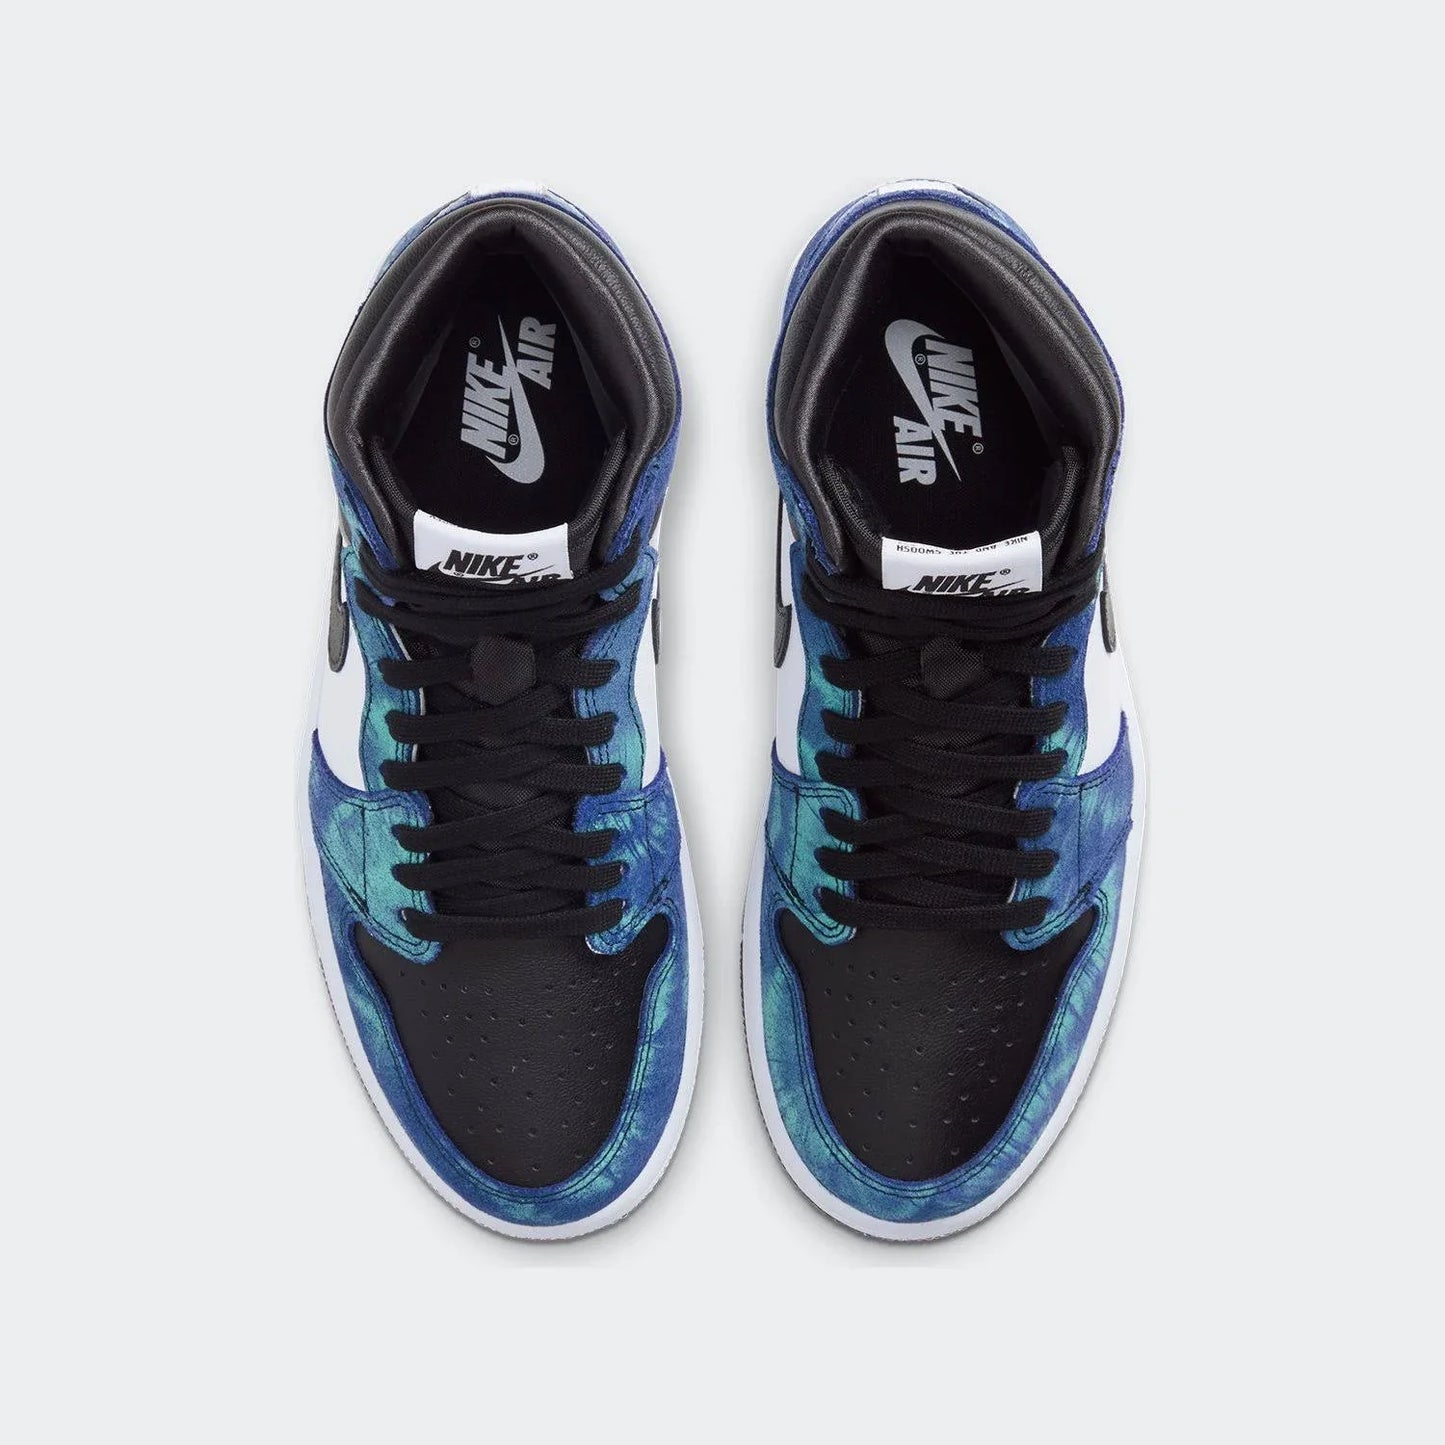 Nike Air Jordan 1 Retro High OG 'Tie-Dye' Black Friday Sale